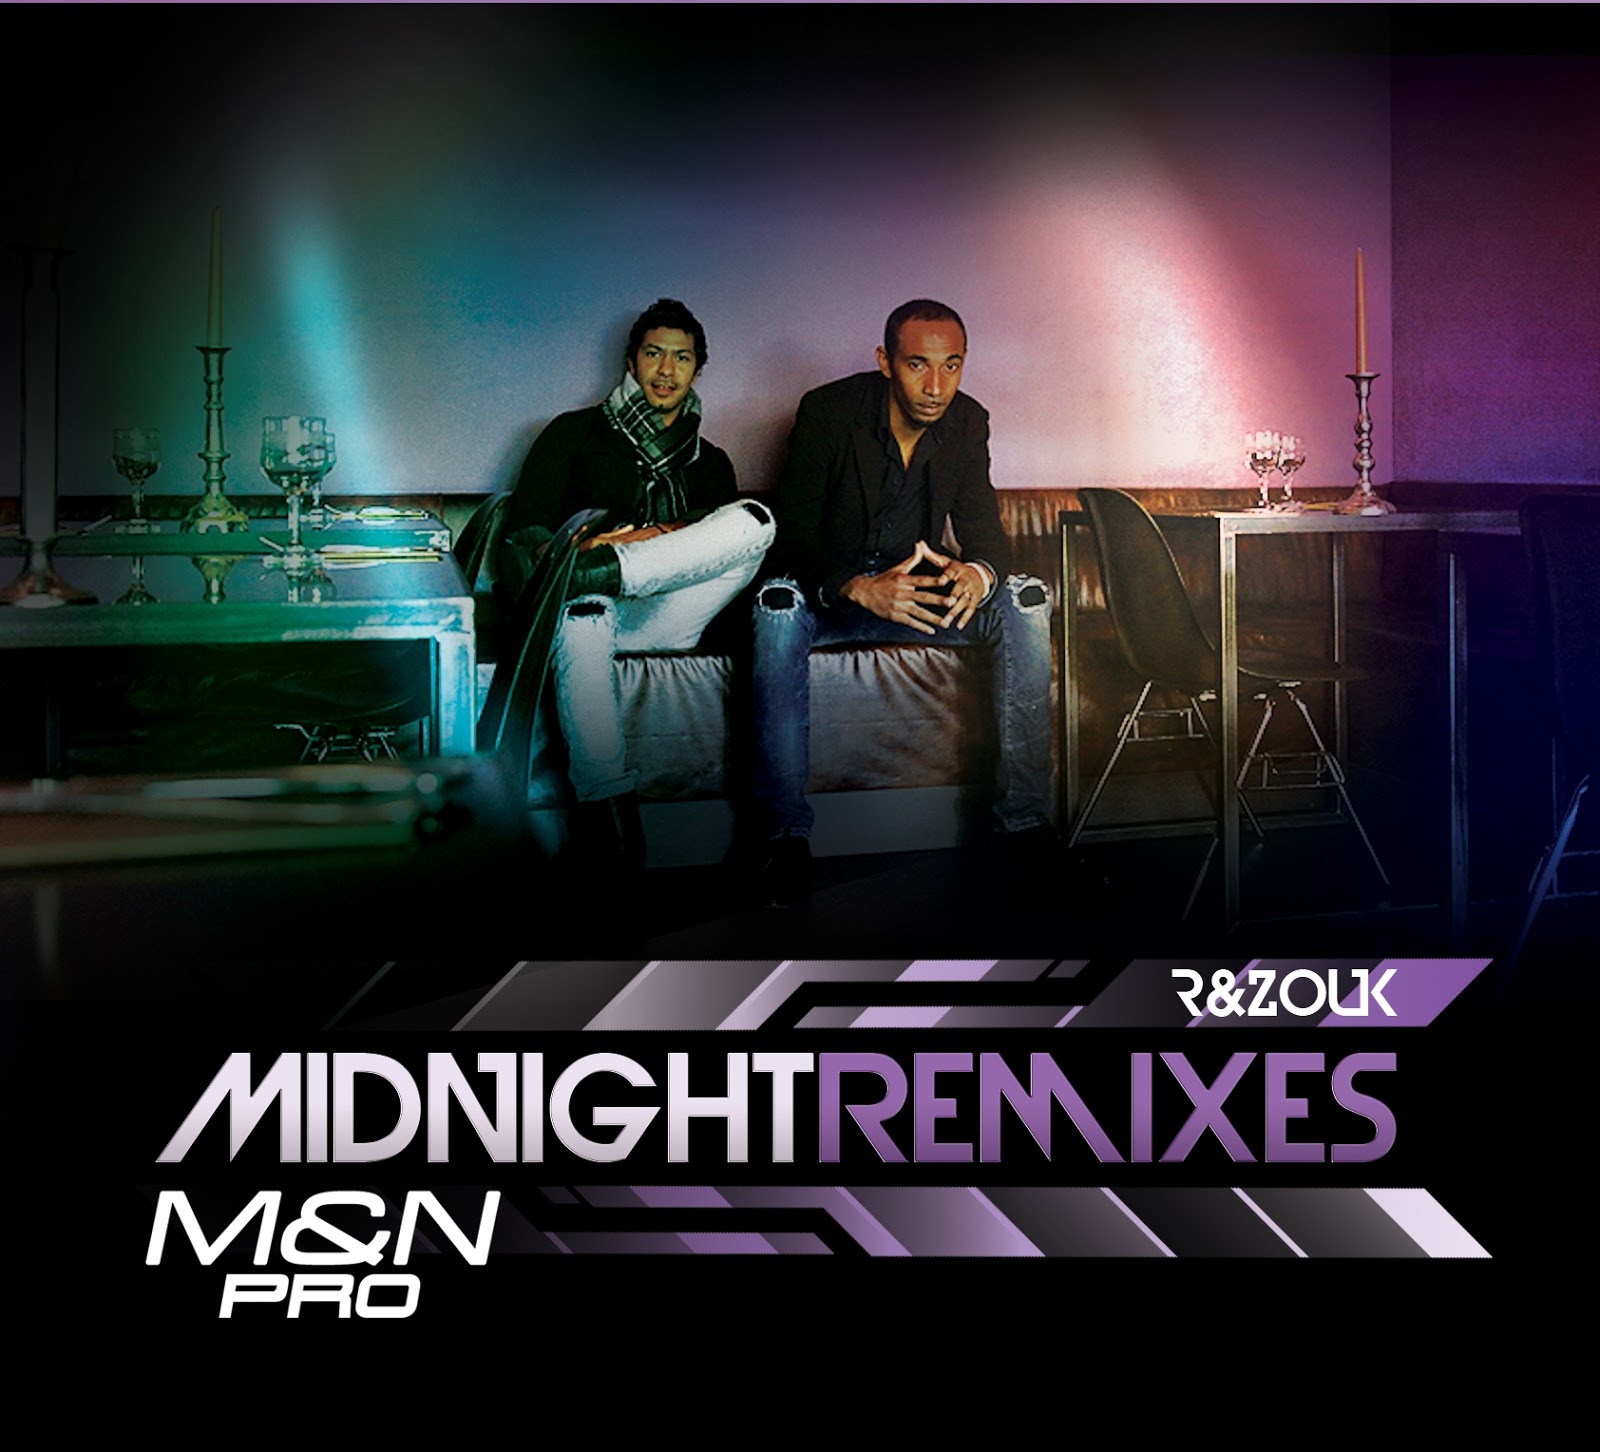 M remixes mp3. John Legend - Tonight (+ m&n) (Remix) !.